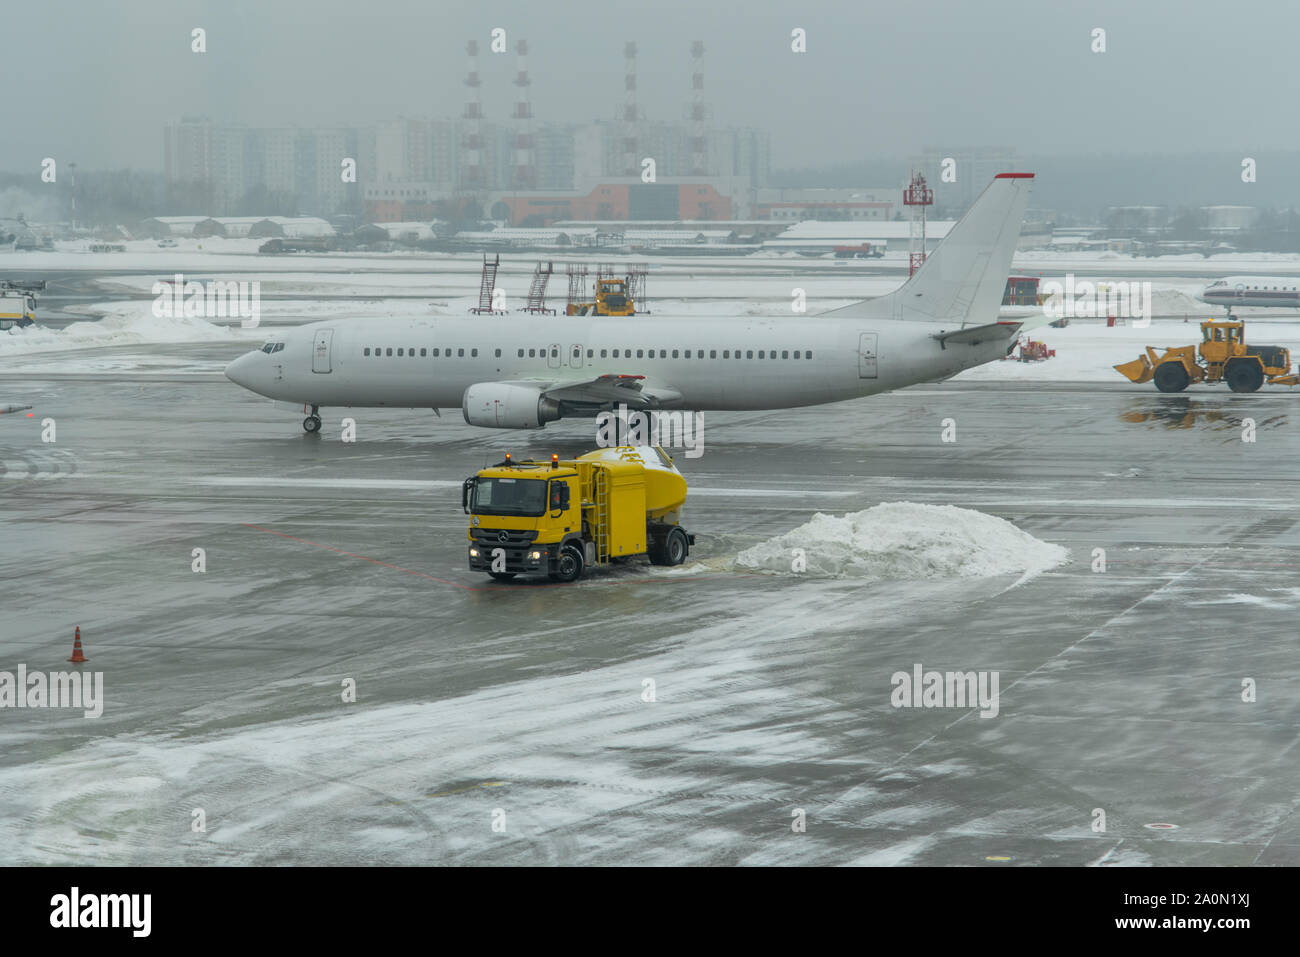 Airport under snowfall Stock Photo